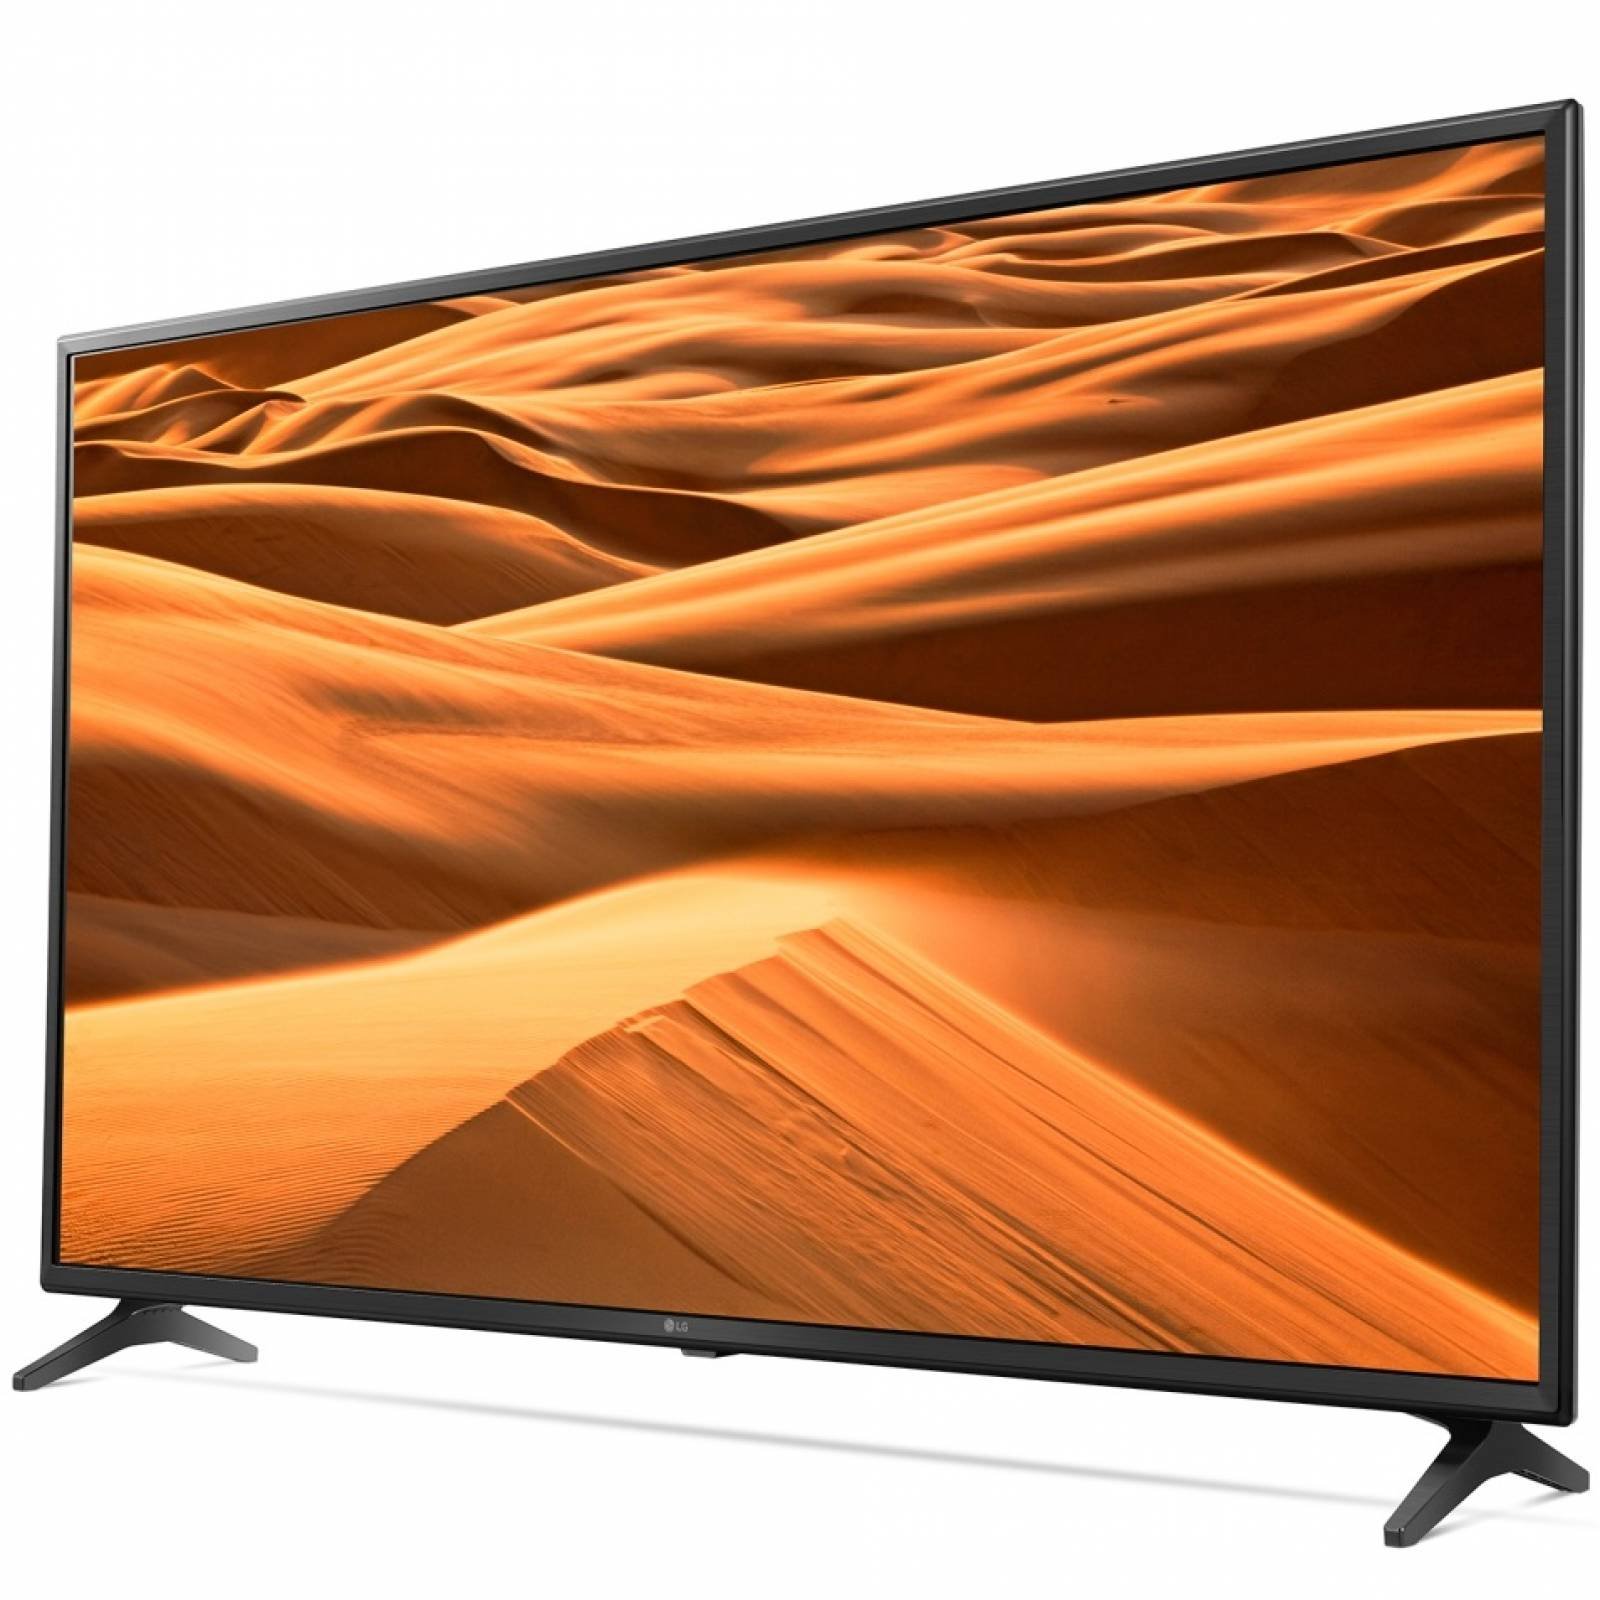 Smart TV 55 LG 4K HDR10 Panel IPS Clear Voice III 55UM6910PU